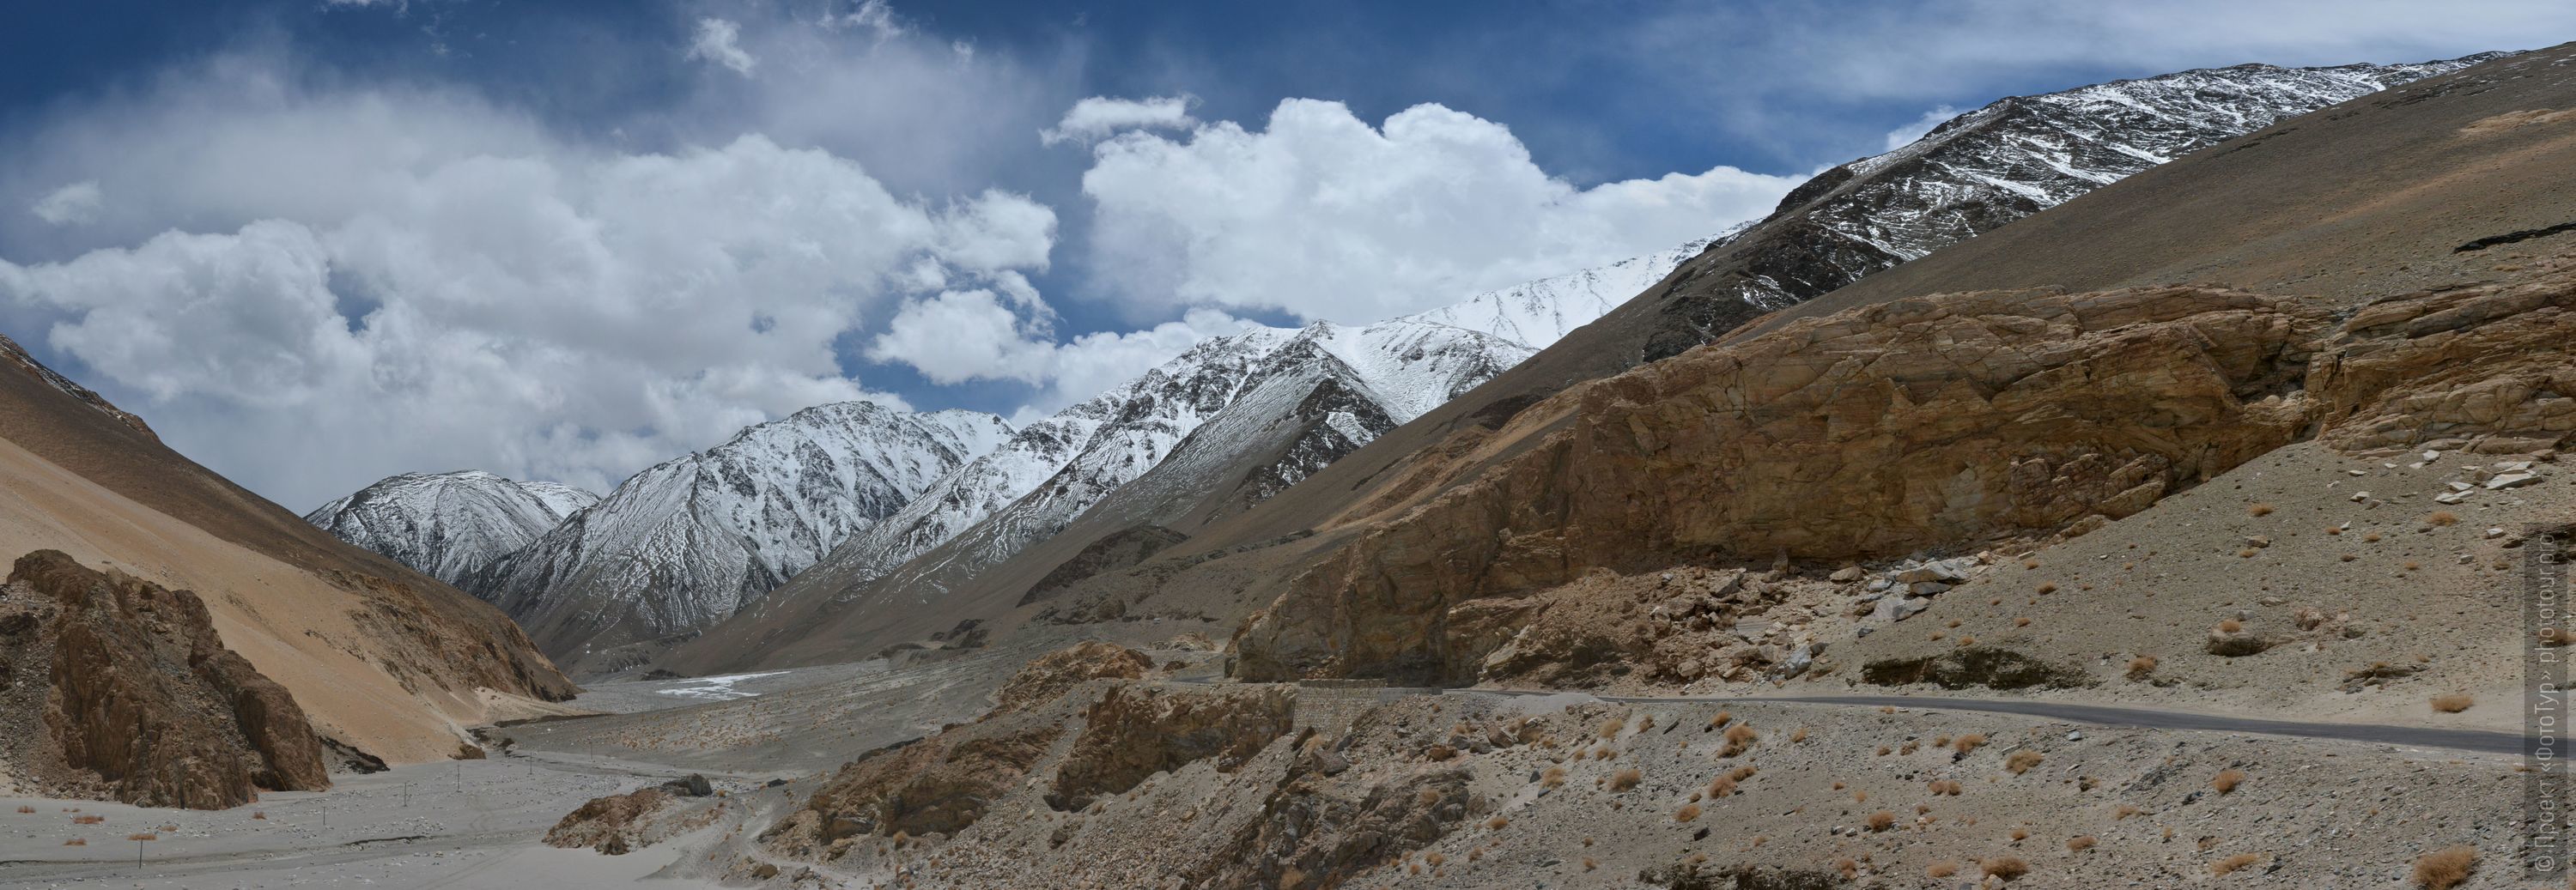 Дорога на озеро Пангонг, Ладакх, 2014г. Фототуры в Ладакх, фототуры в Тибет.